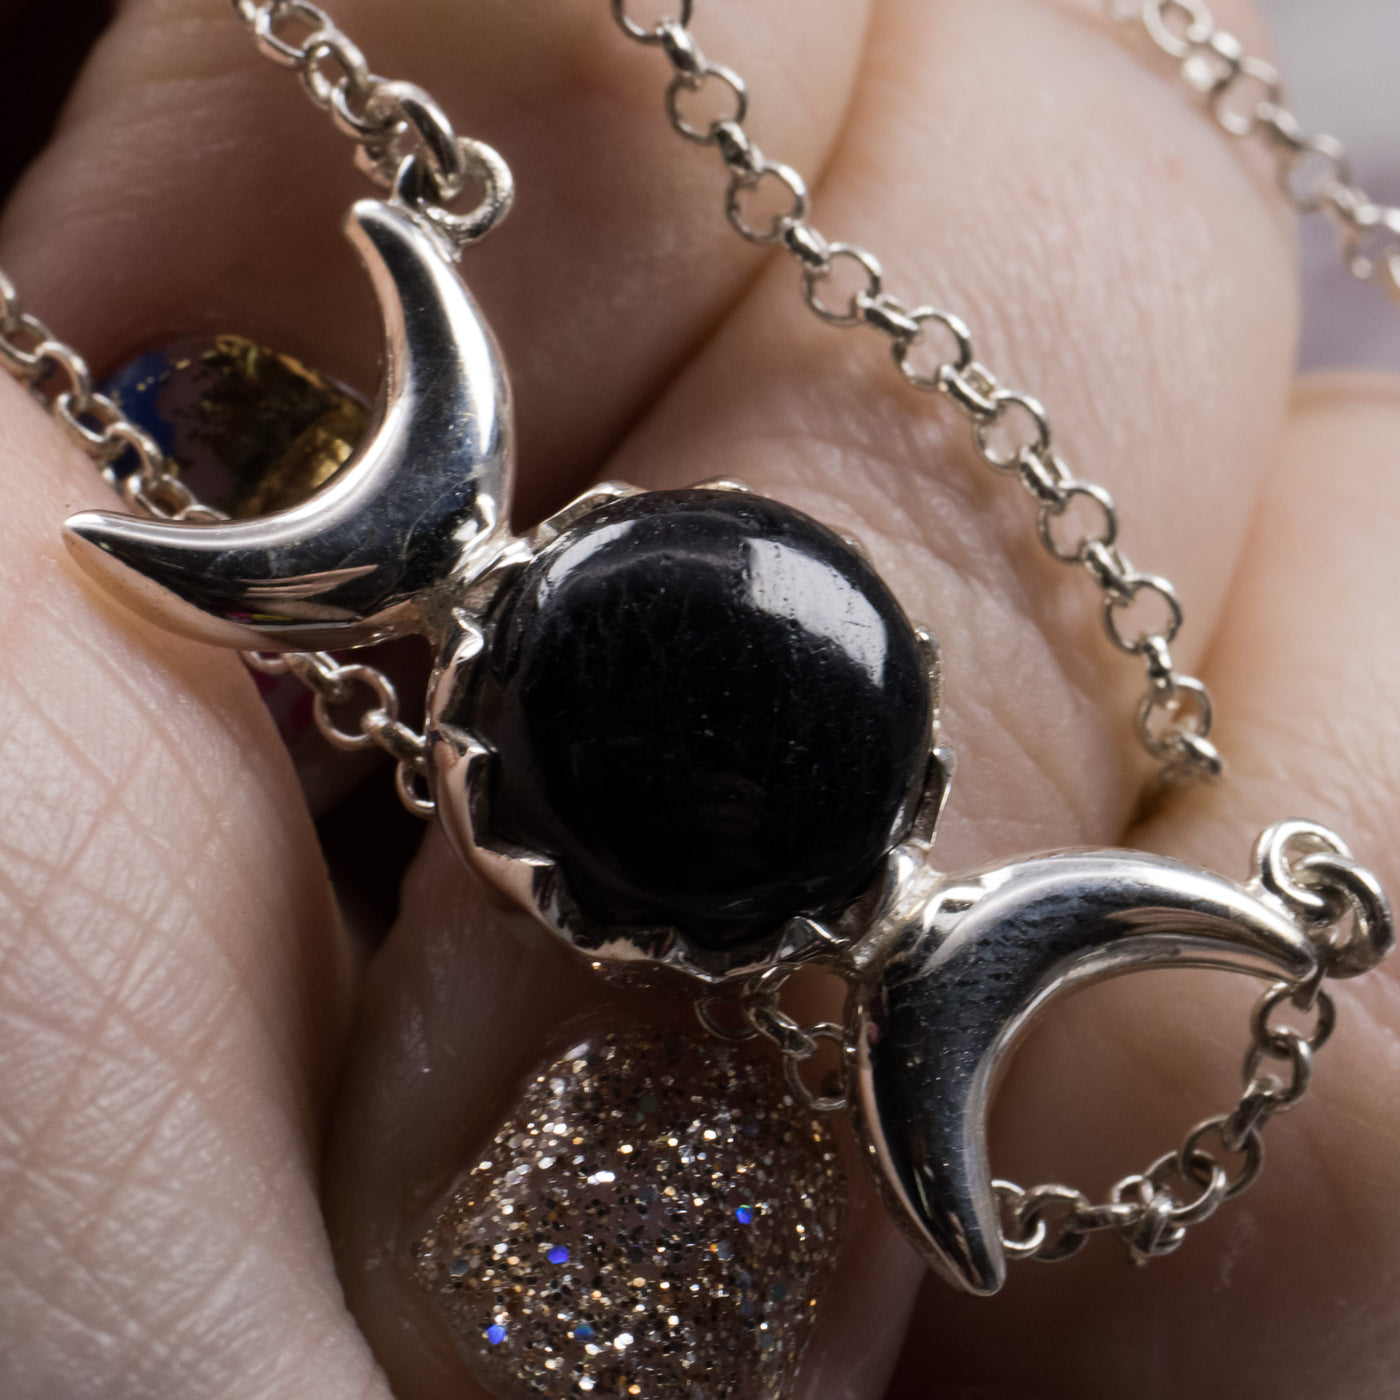 Triple Goddess Obsidian Pendant Necklace